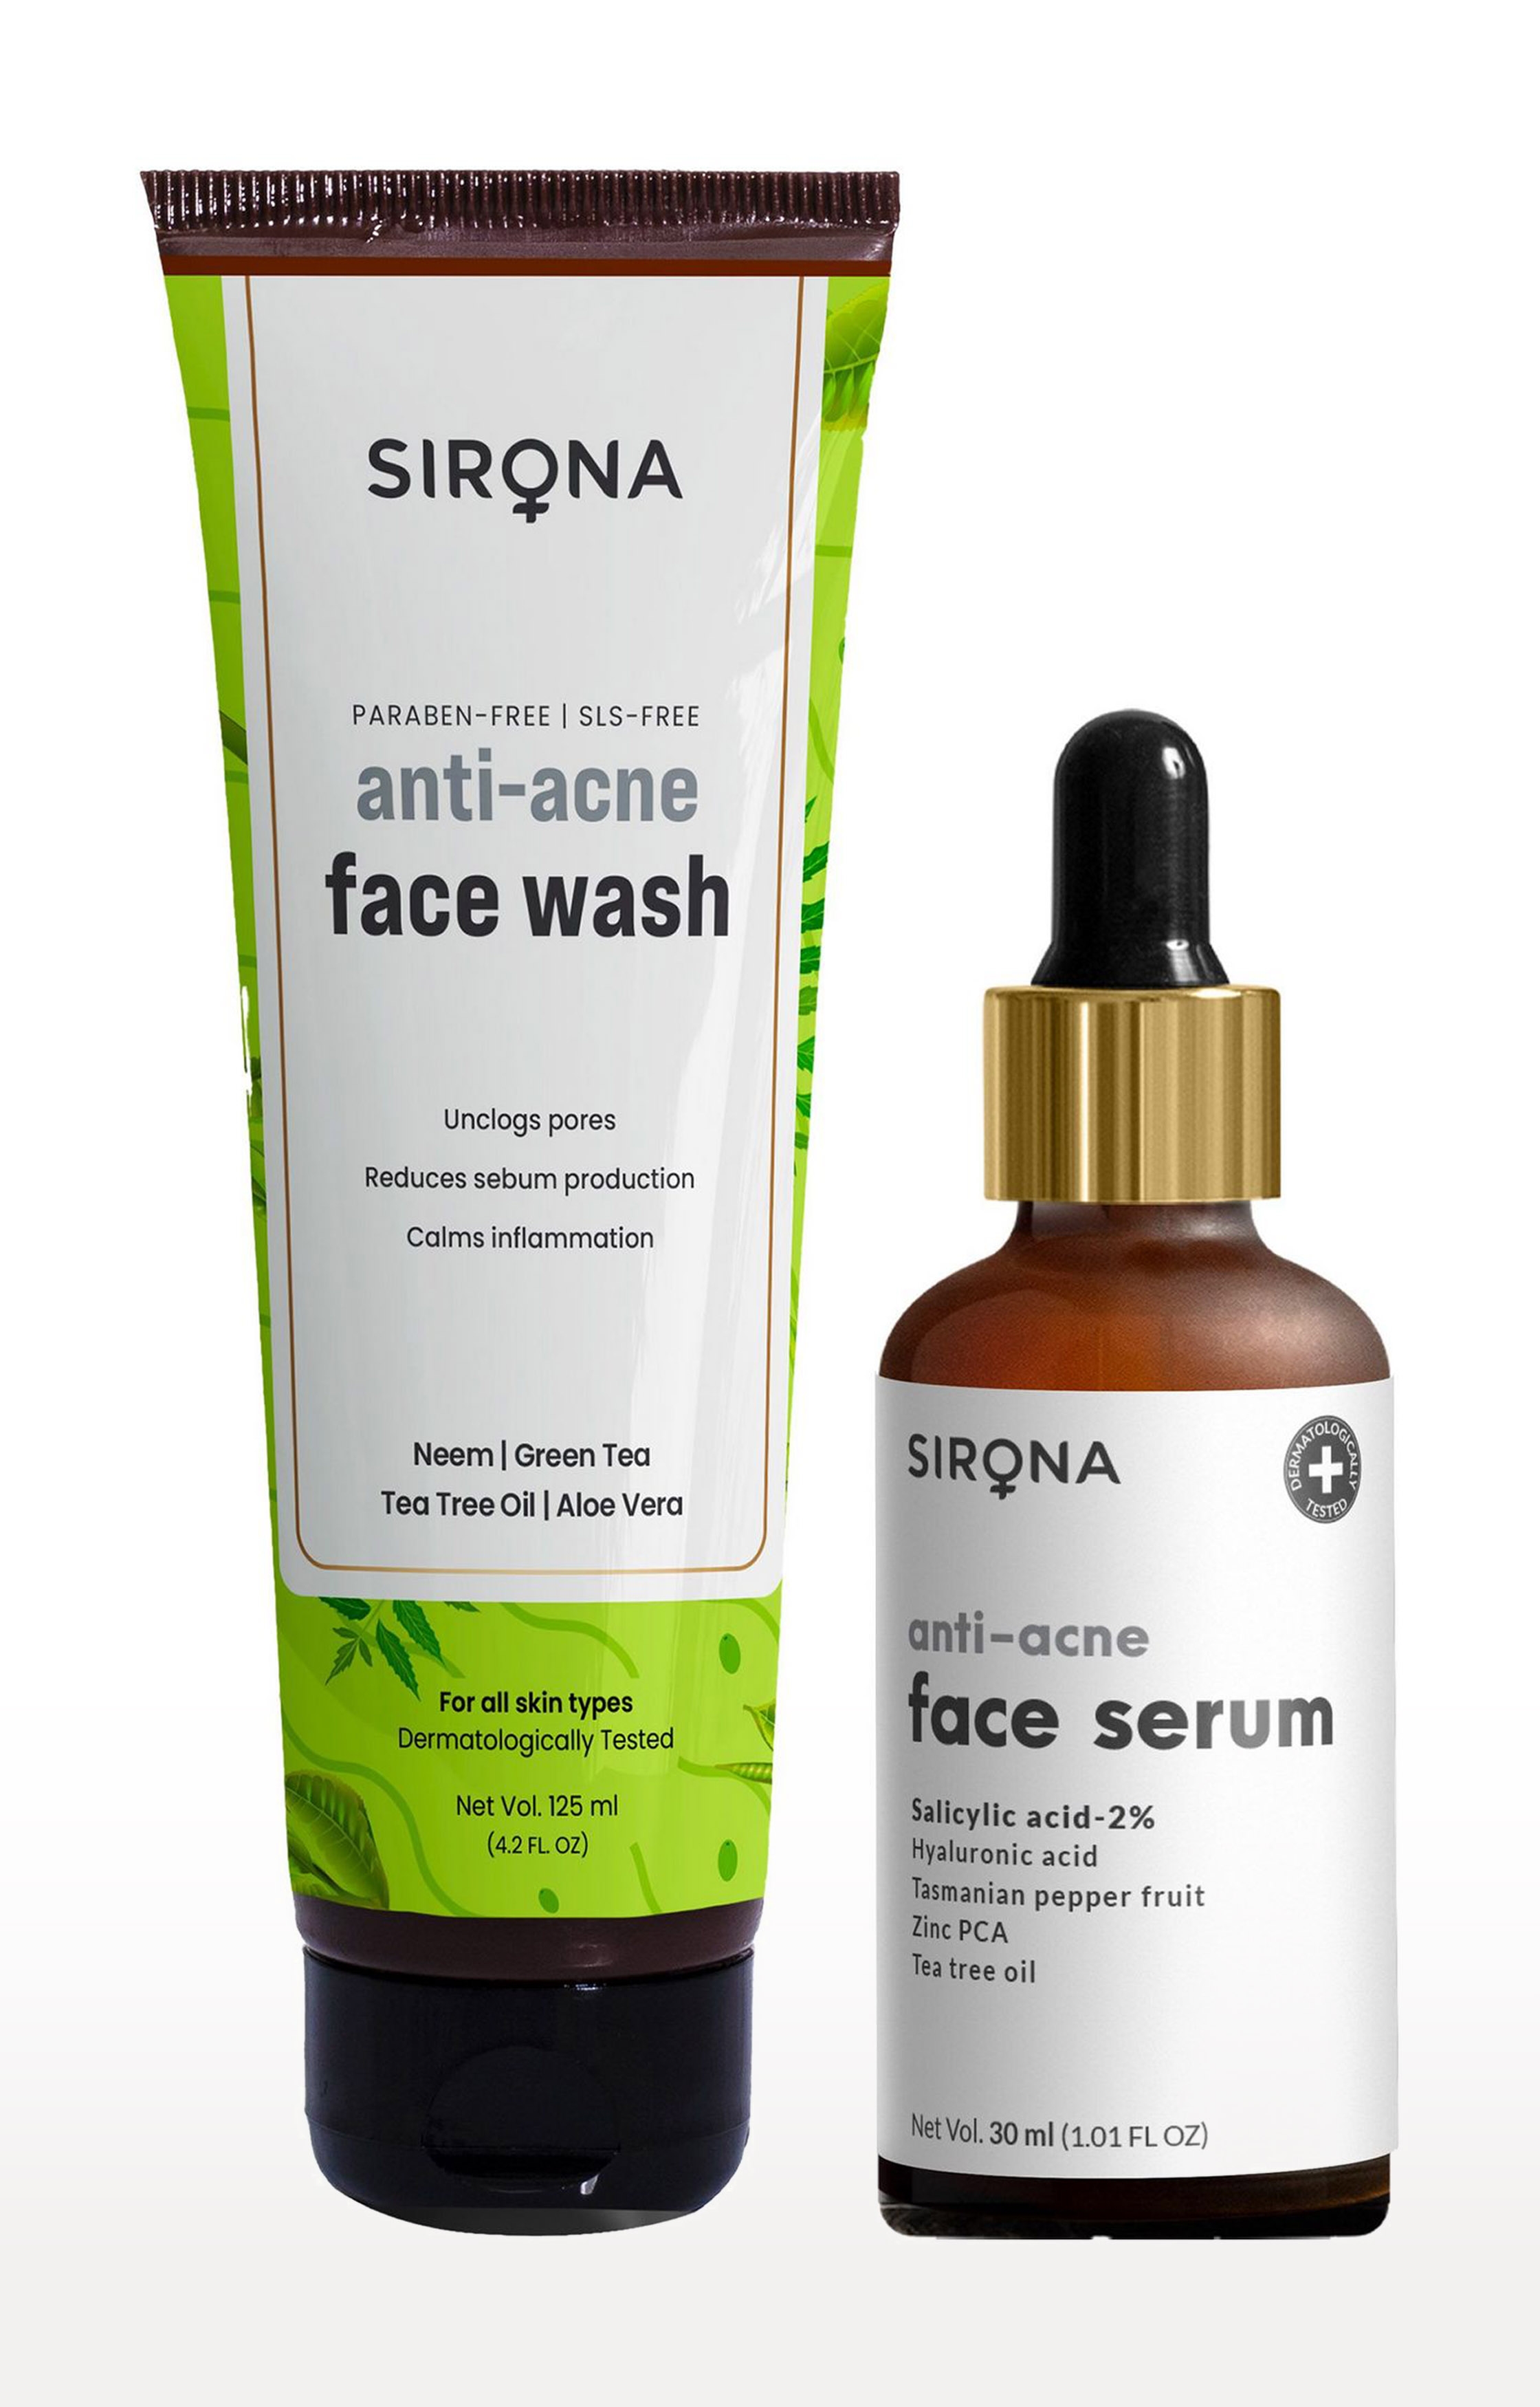 Sirona Anti Acne Face Serum + Anti Acne Face Wash